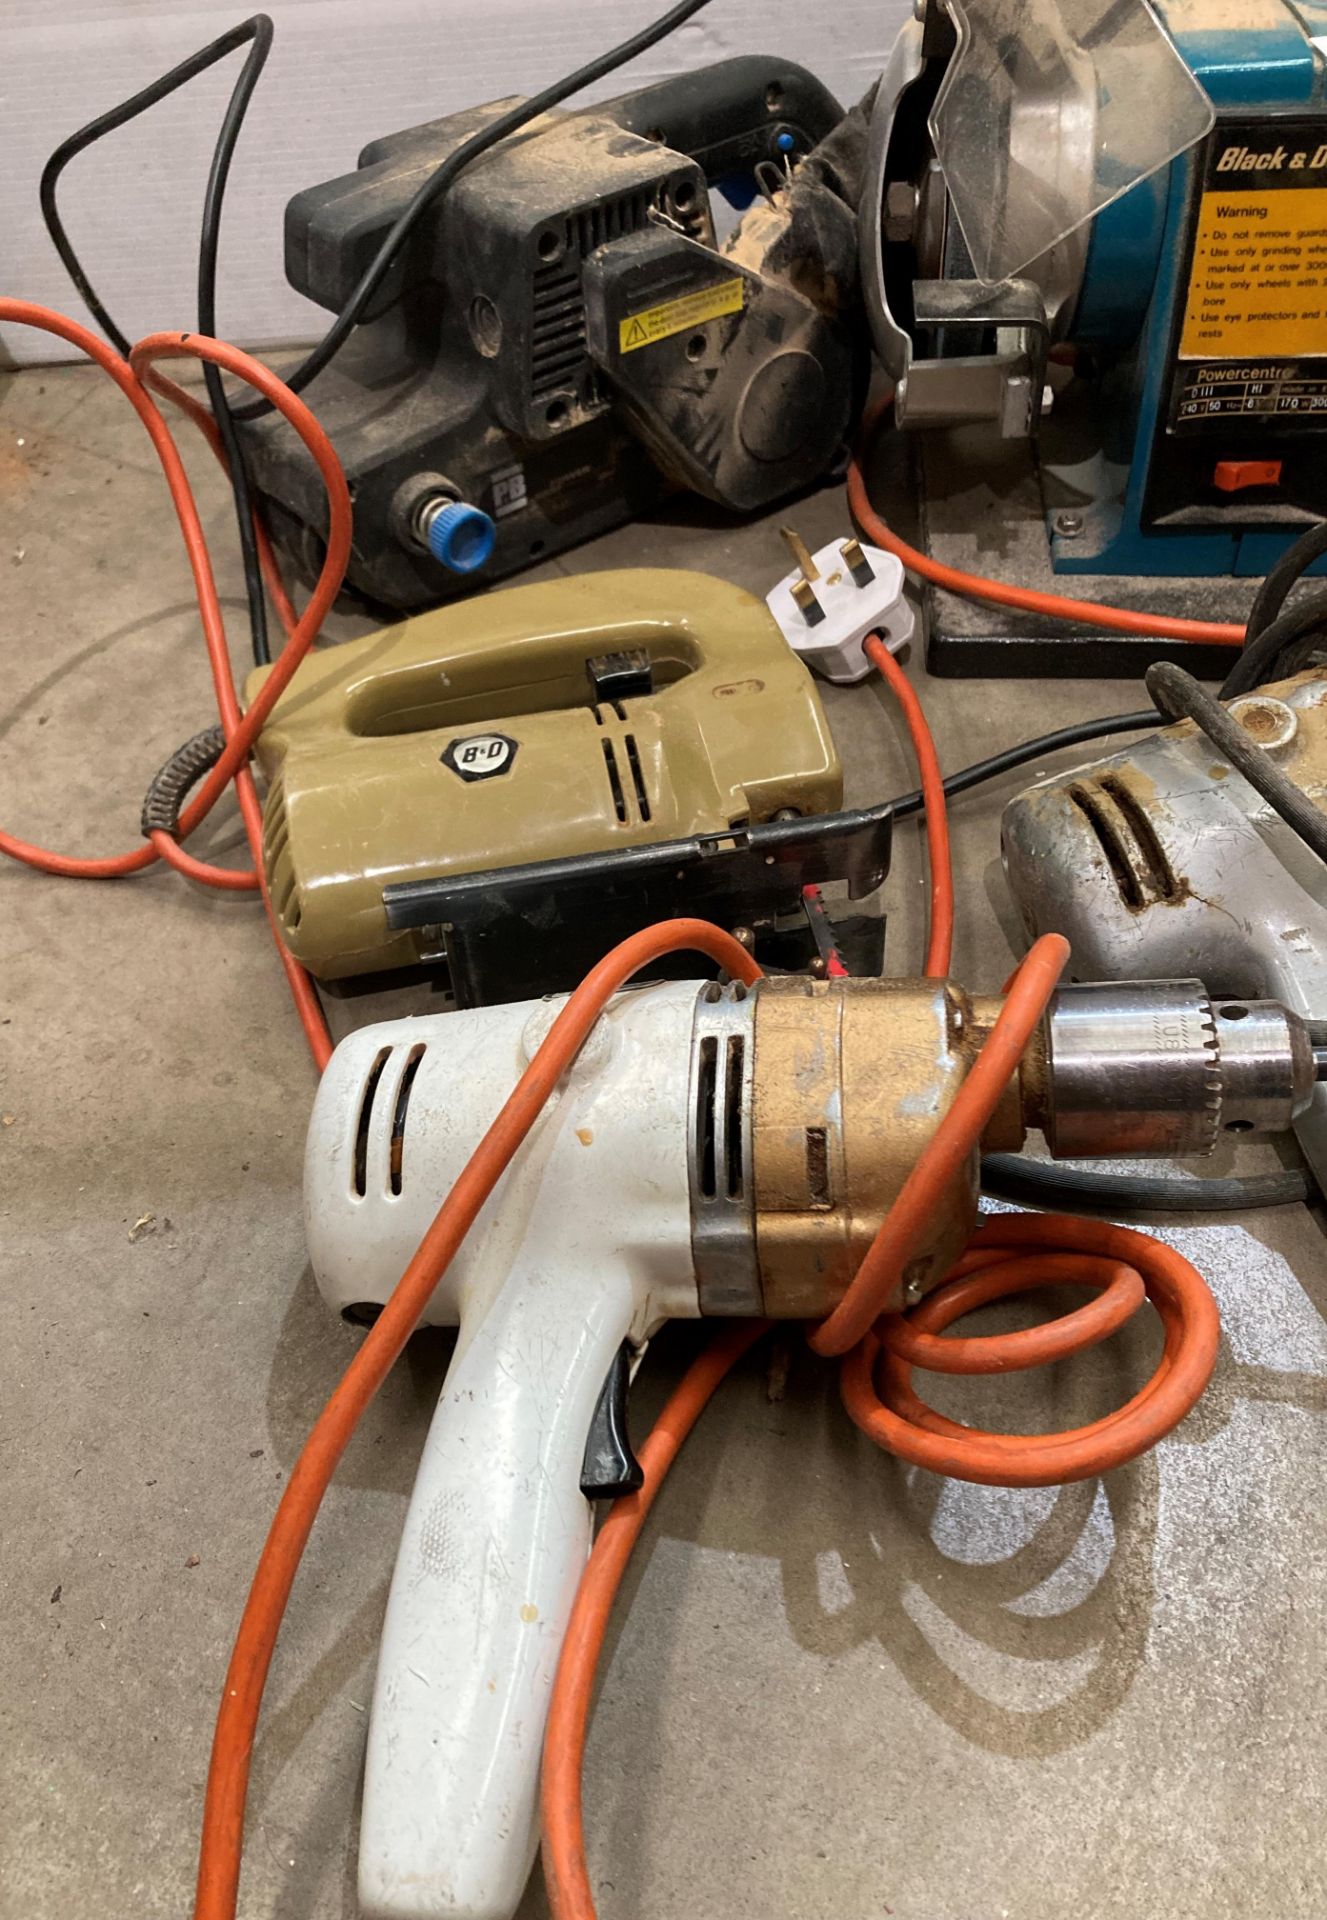 Five assorted 240v power tools including Black & Decker Powercentre DIII grinder/polisher (perished, - Image 3 of 3